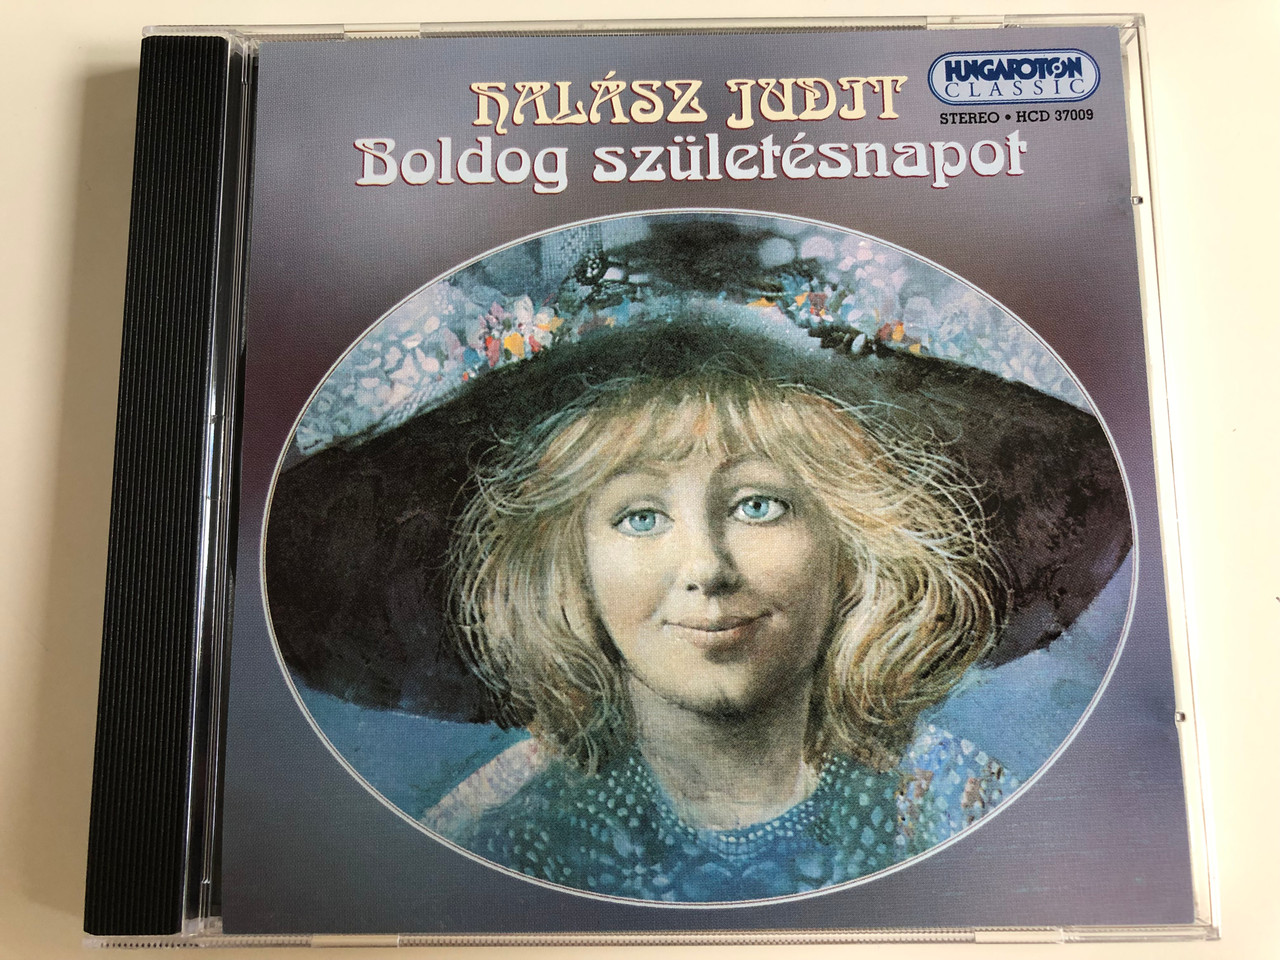 Halász Judit - Boldog Születésnapot / Hungarian Nursery Rhymes and  Children's Songs / Audio CD 1998 / Hungaroton Classic / HCD 37009 -  bibleinmylanguage